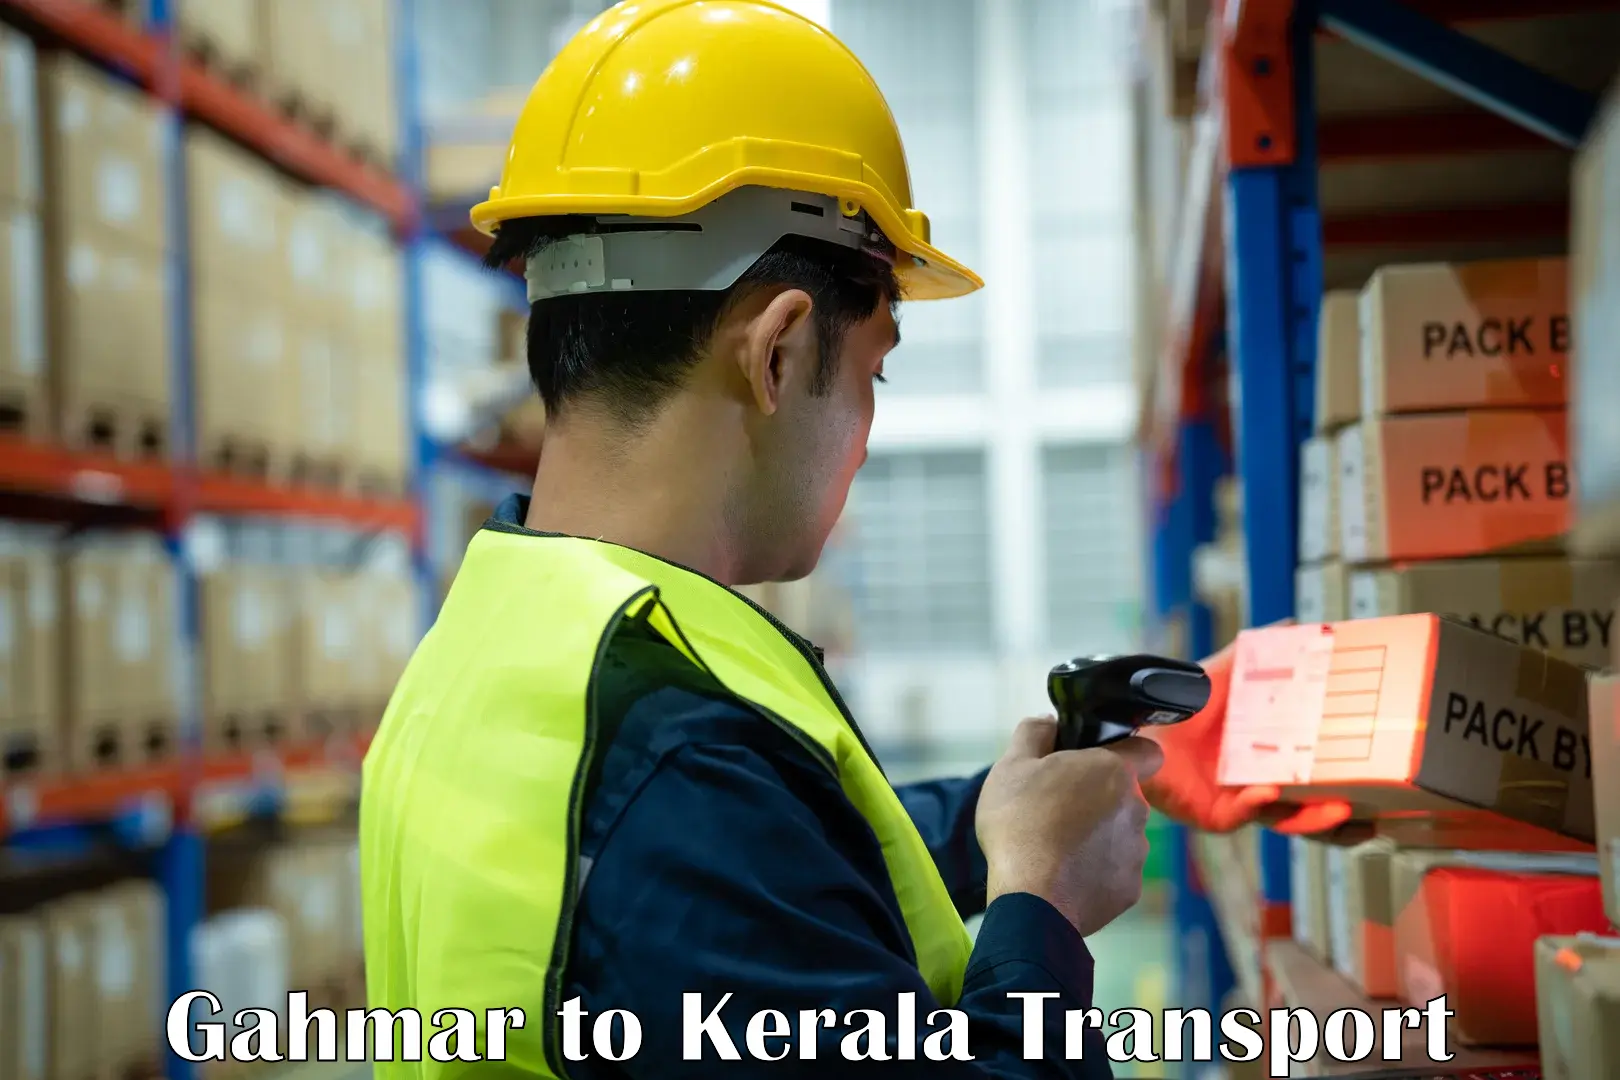 Cargo transportation services Gahmar to Cochin Port Kochi